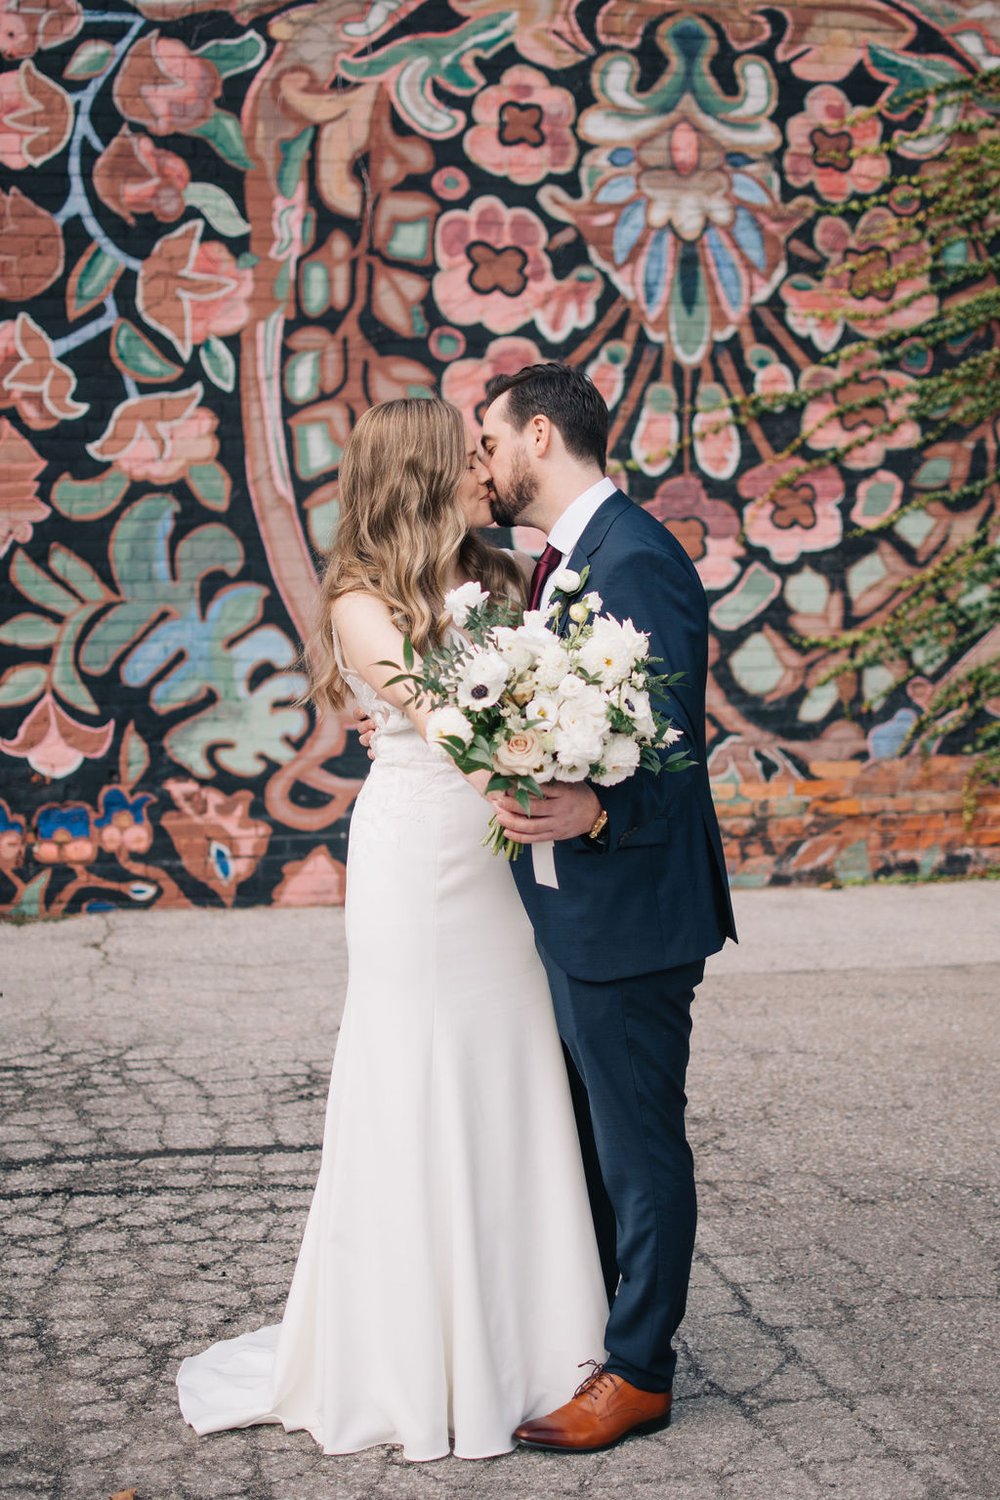 Elegant wedding day photographs at Toronto's Liberty Village's Carpet Factory by Toronto wedding photographers, Ugo Photography